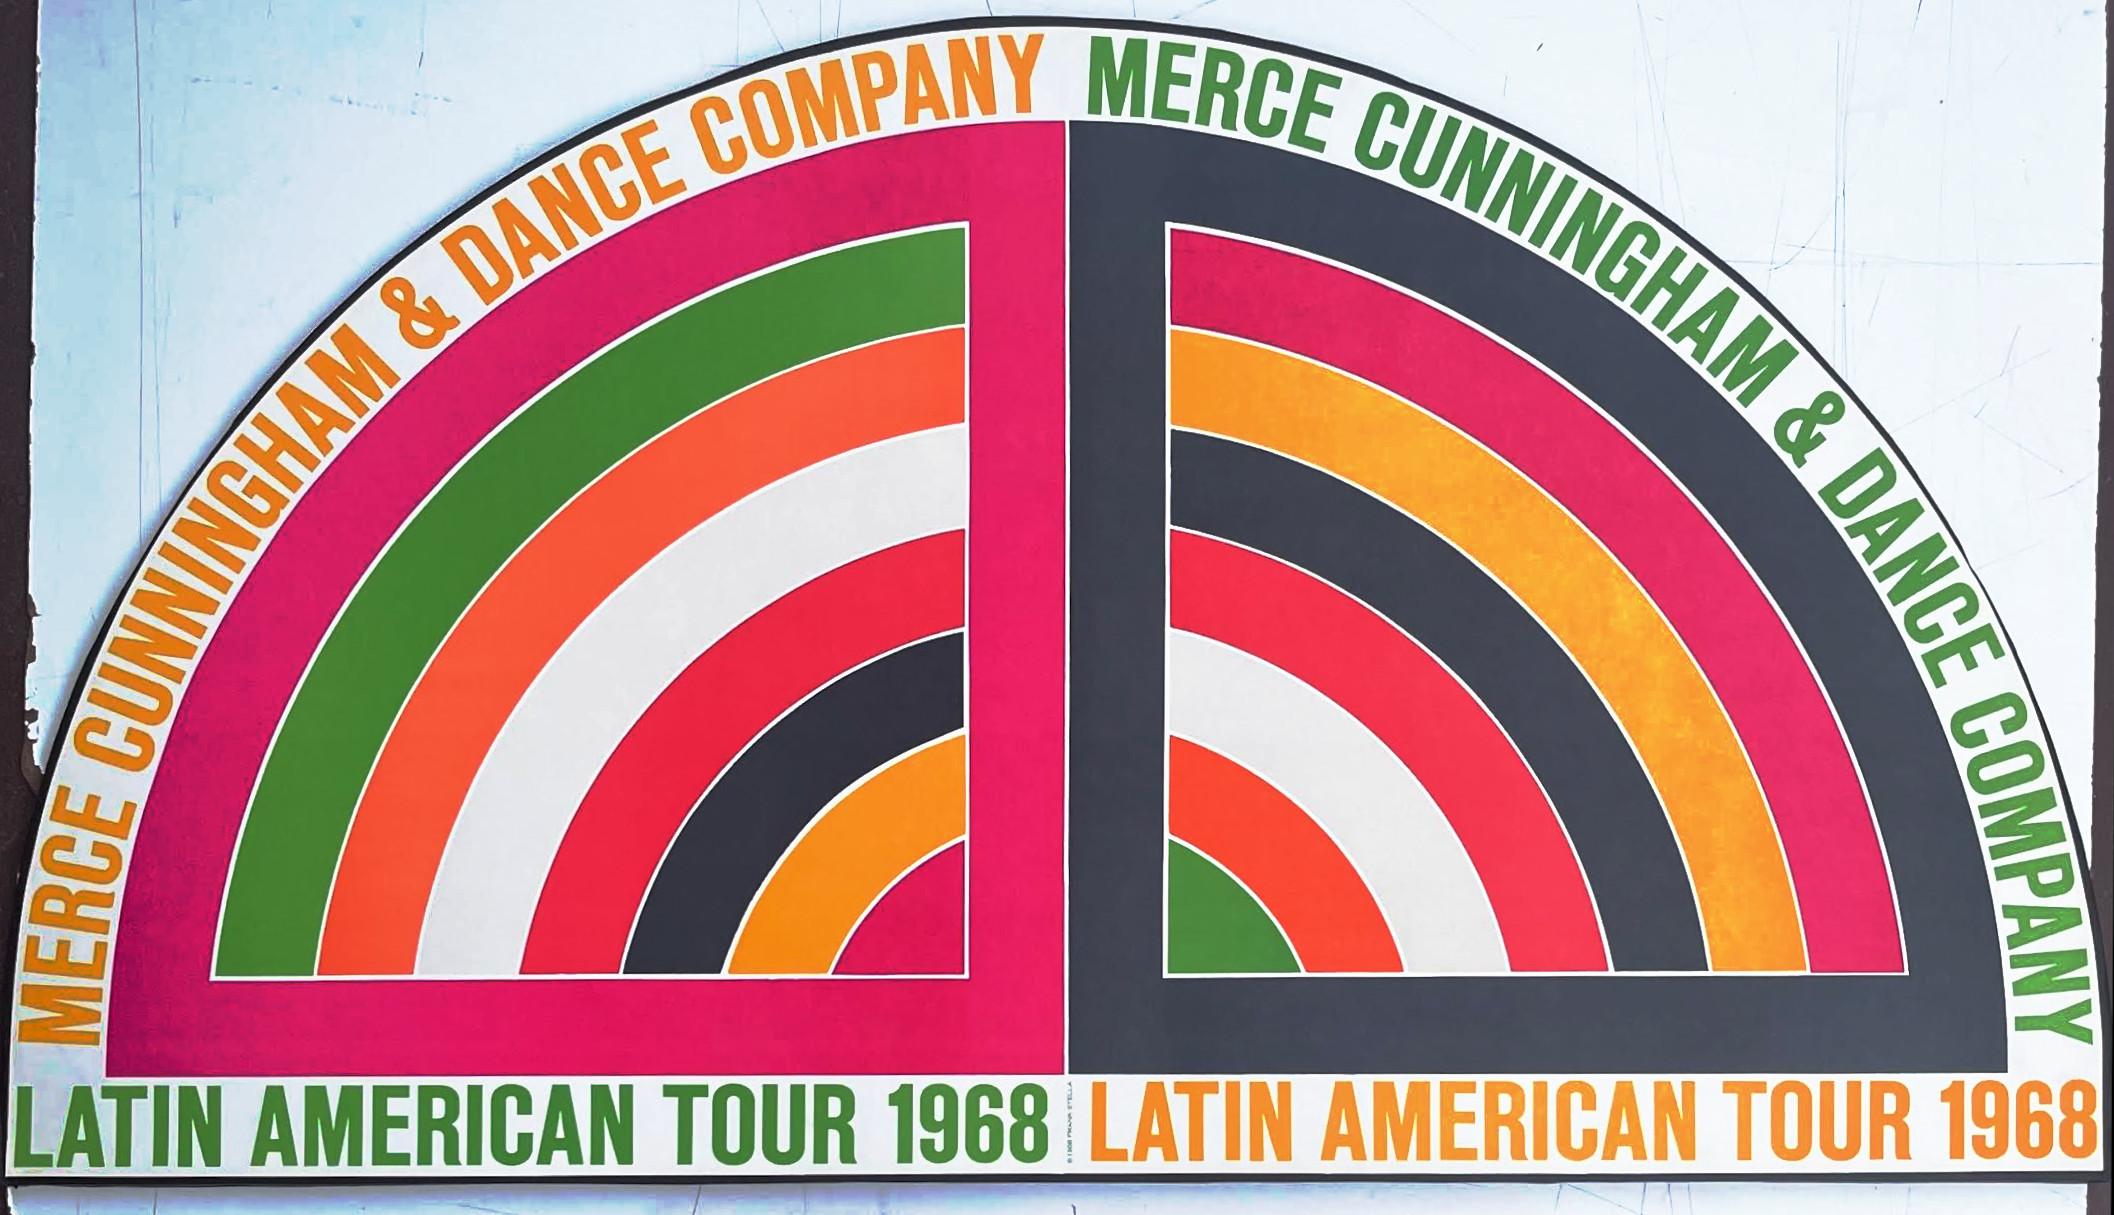 Merce Cunningham & Dance Company Latin American Tour - Pop Art Print by Frank Stella